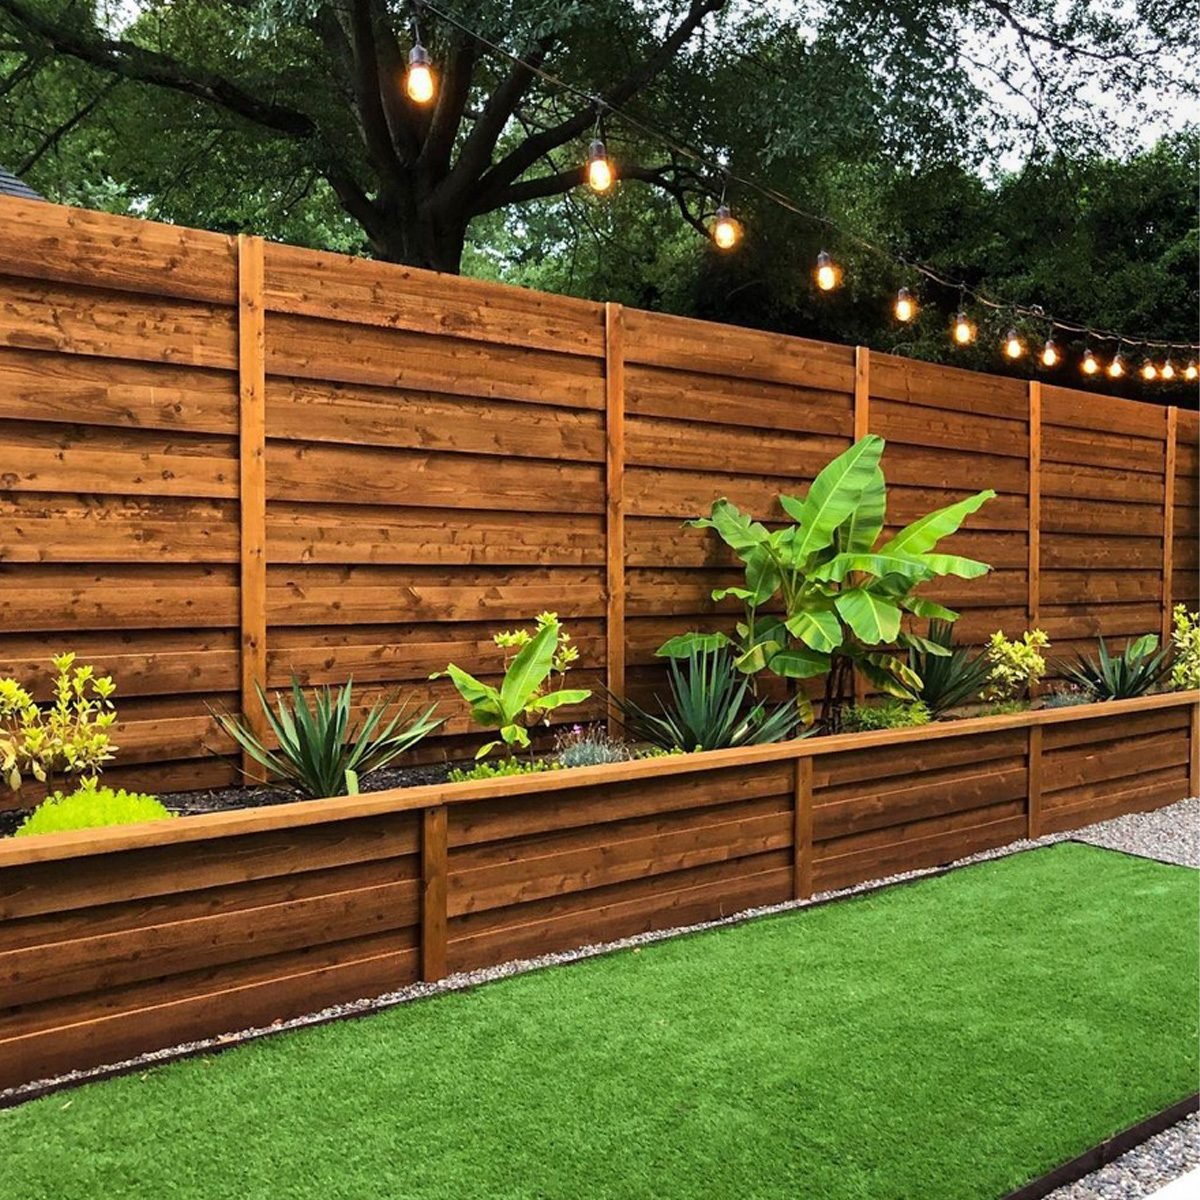 10 Inspiring Wood Fence Ideas And Designs | Family Handyman